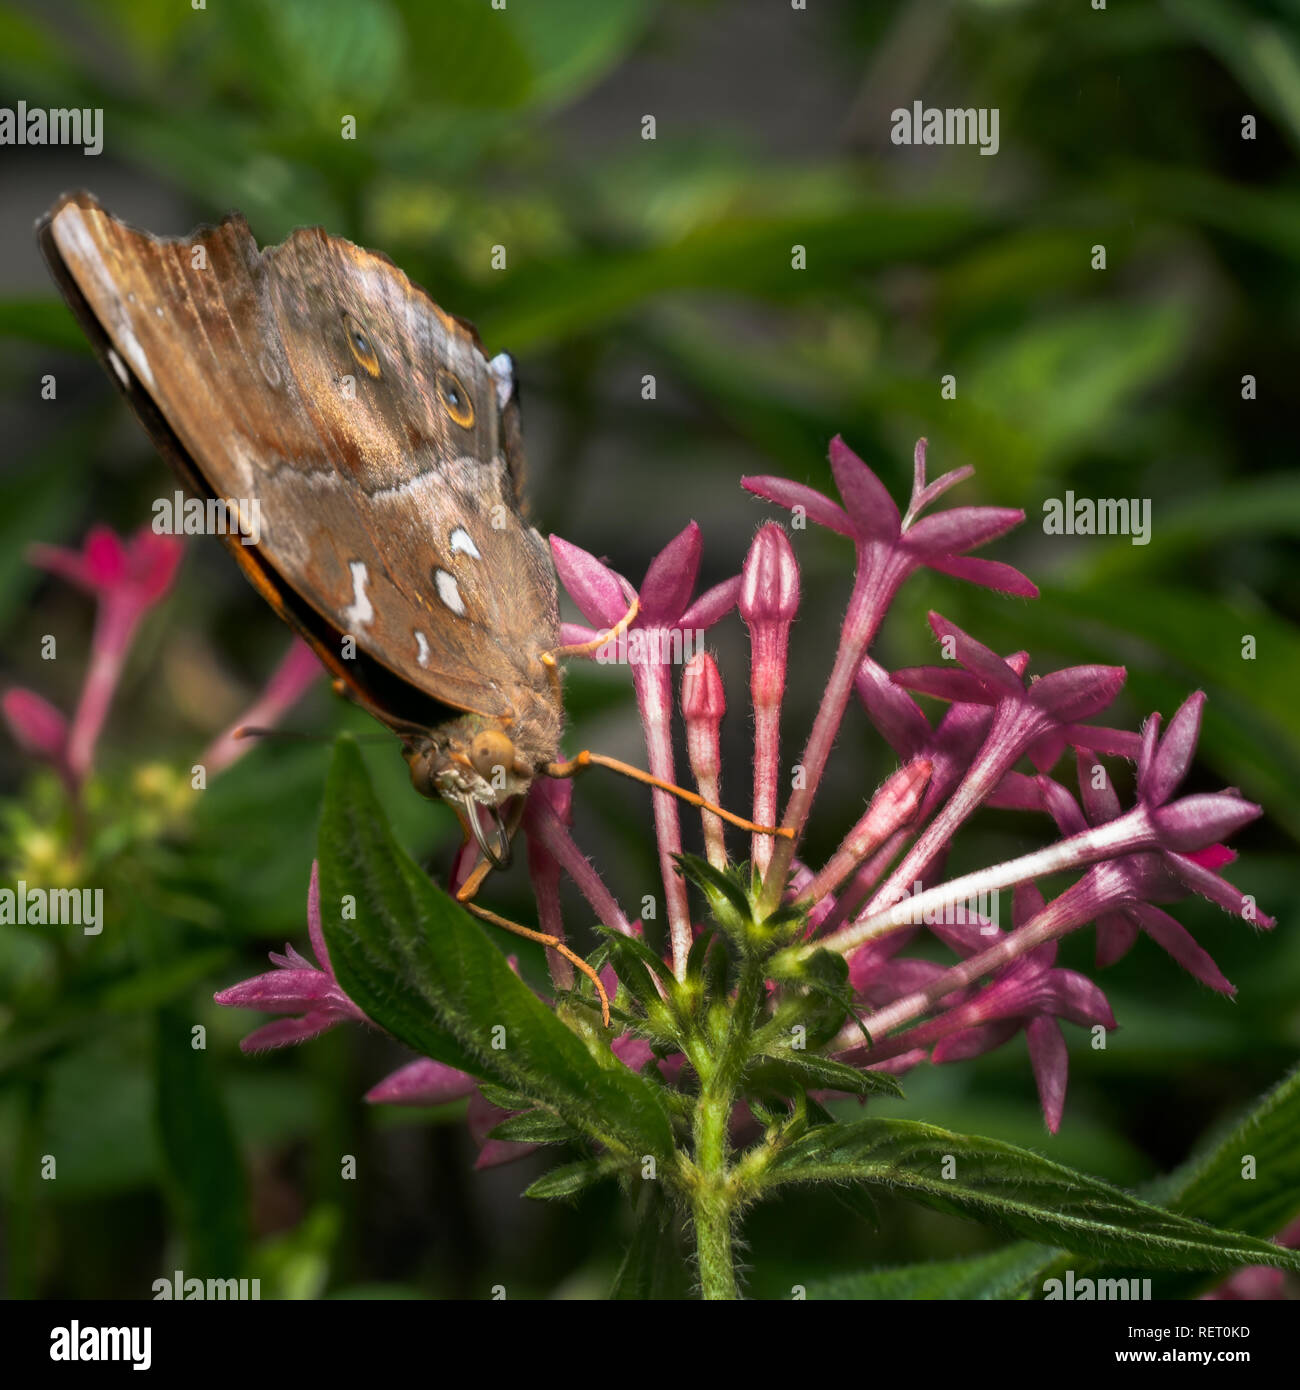 Hoja de Otoño asiática, Leafwing butterfly butterfly (Doleschallia-bisaltide). Hoja como mariposa en Bali Indonesia sentado boca abajo sobre flores rosas Foto de stock